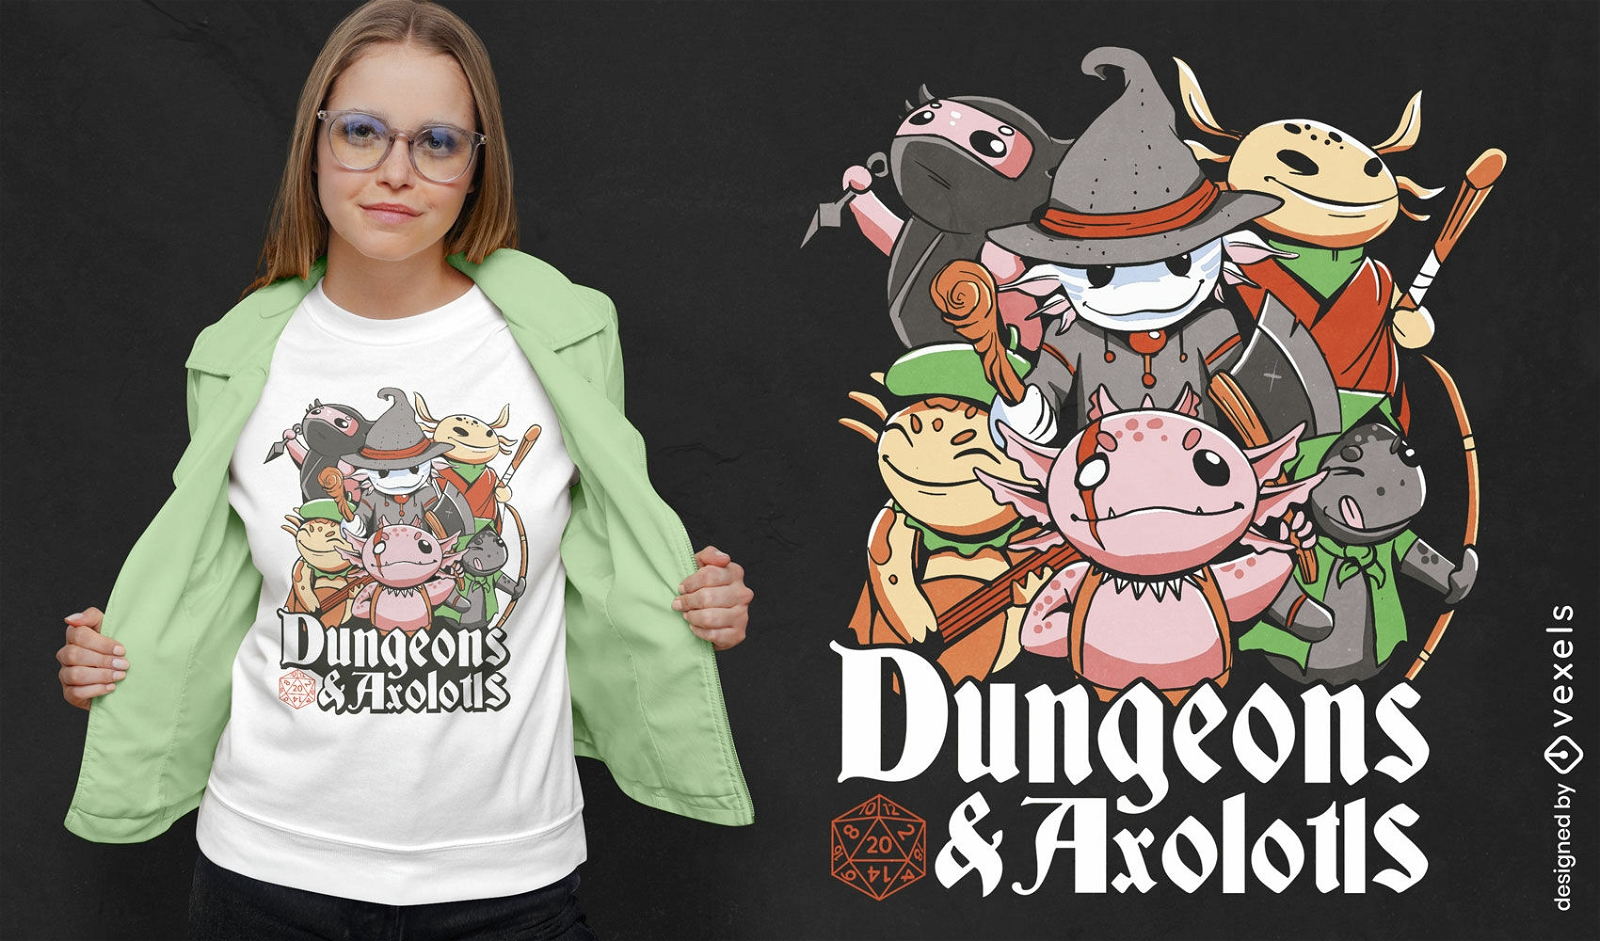 Dungeons and axolotls t-shirt design